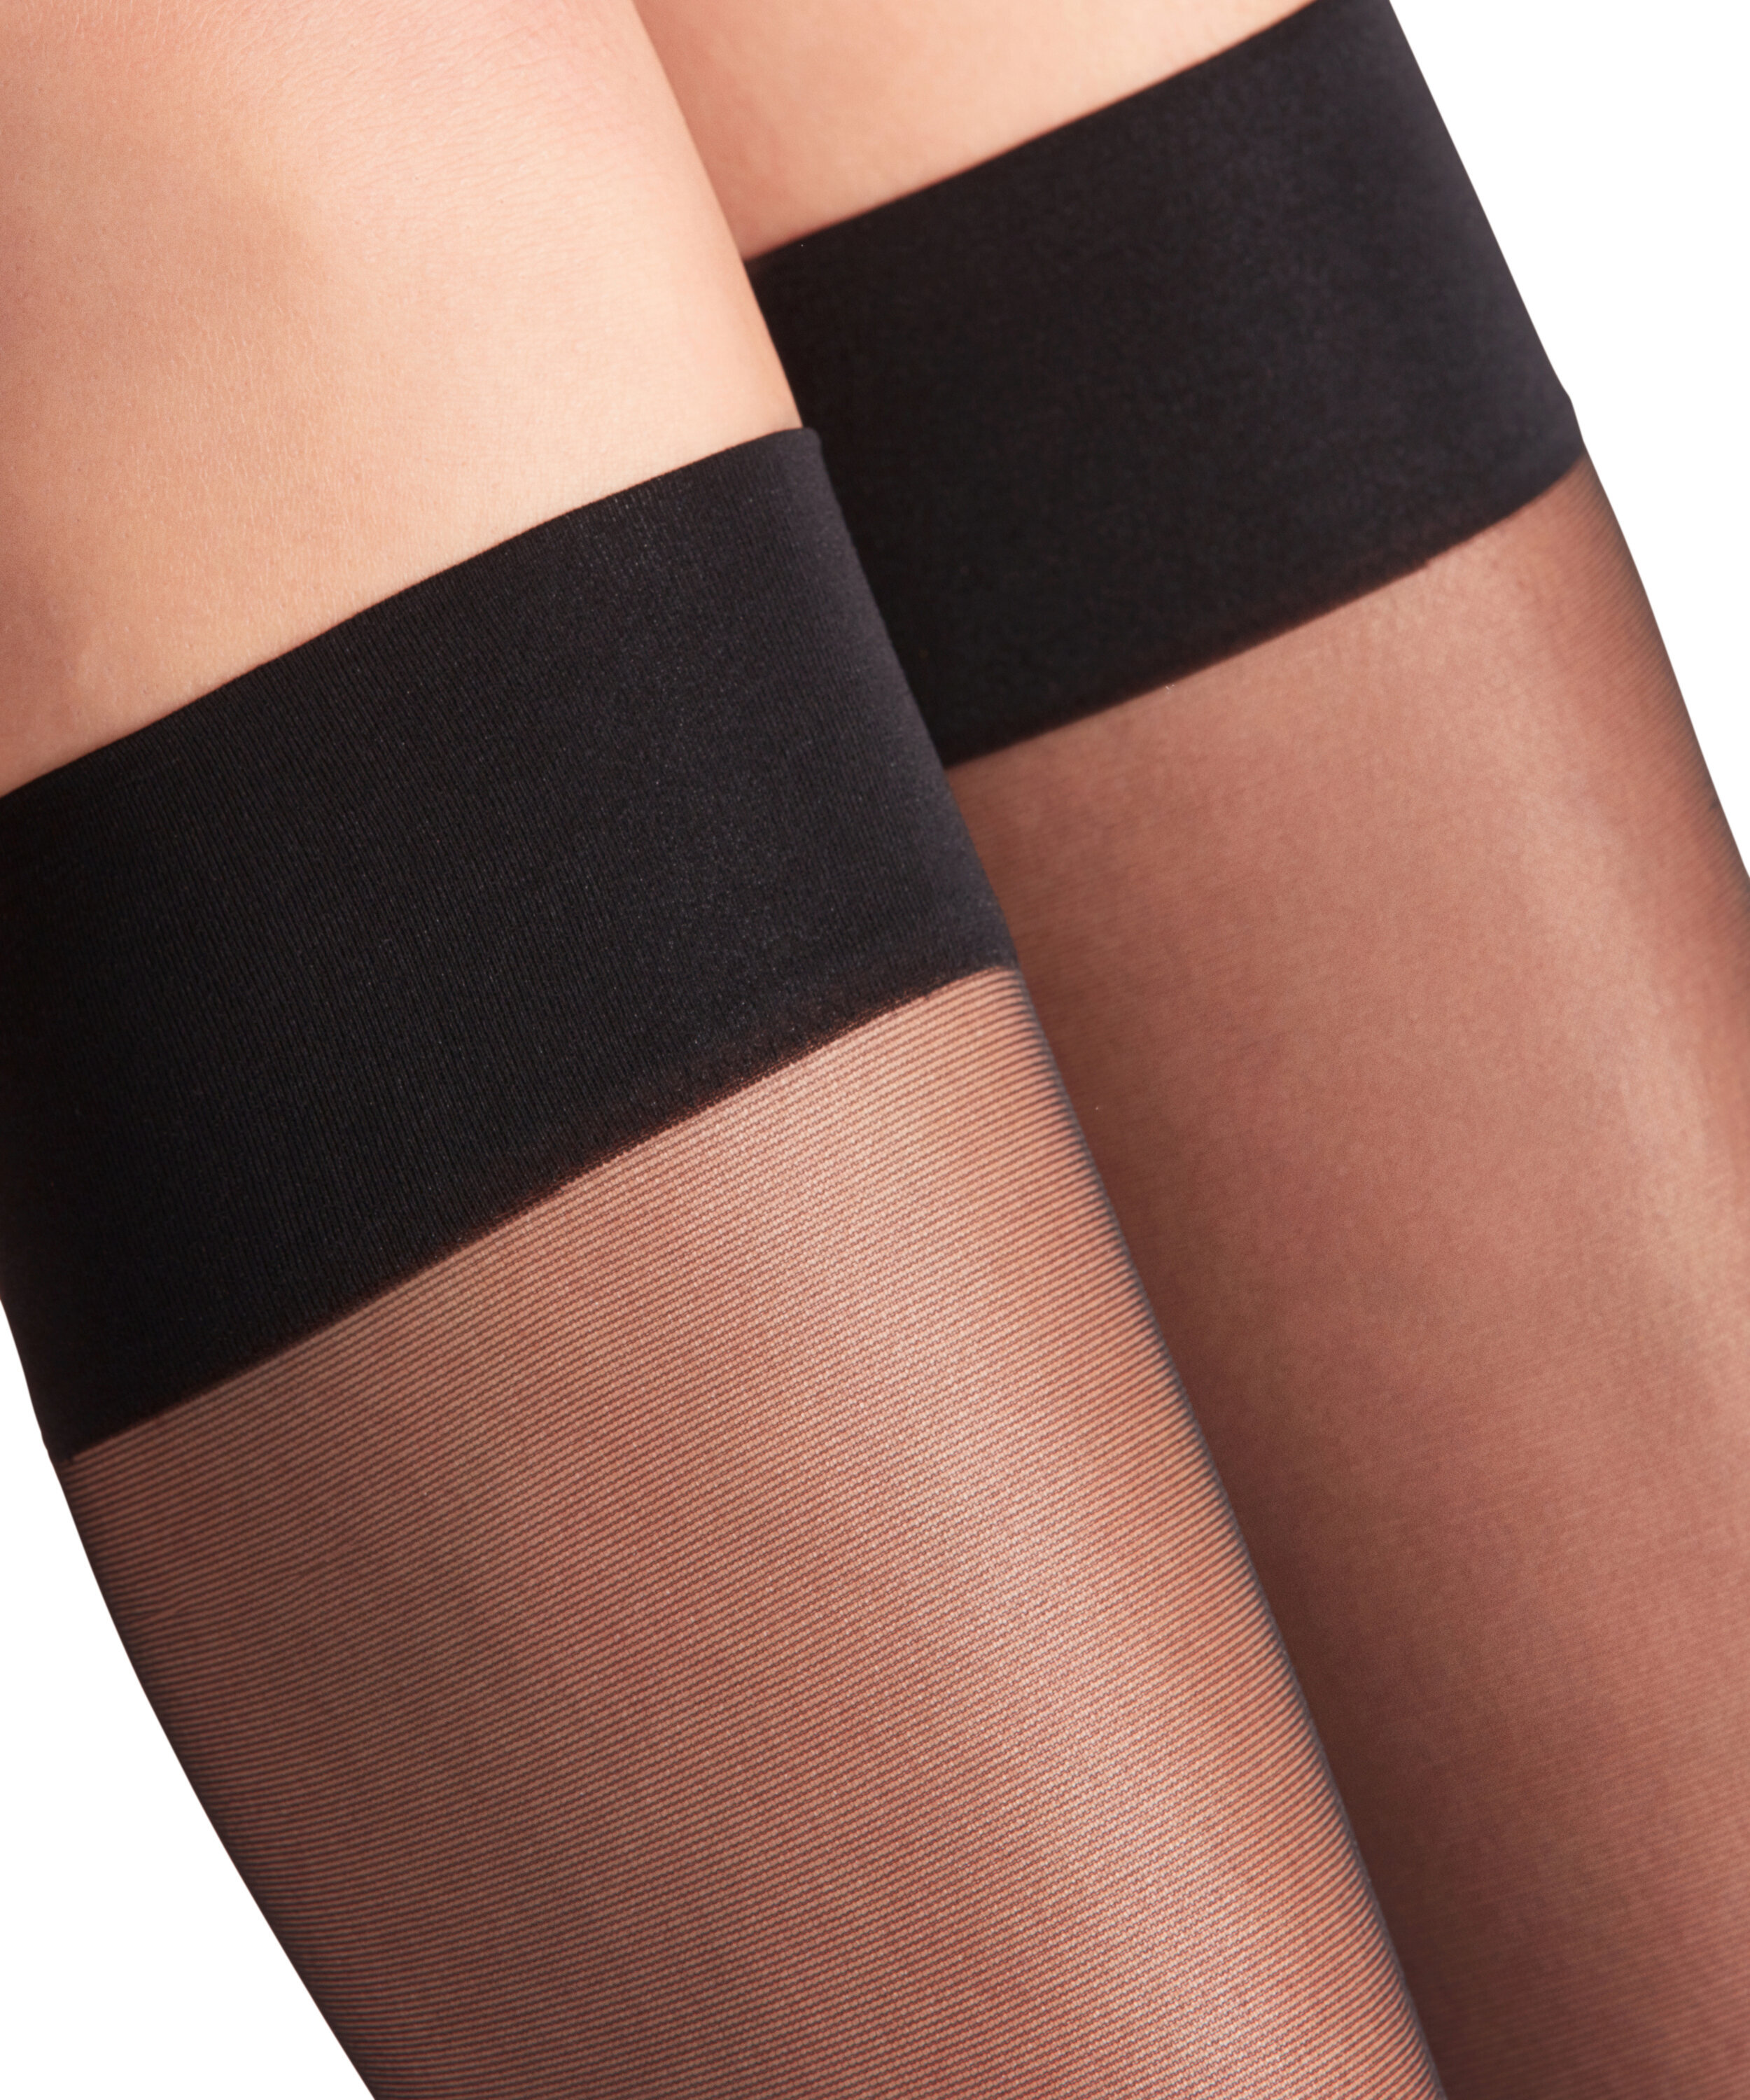 FALKE silk smooth 15 DEN ladies knee socks BLACK